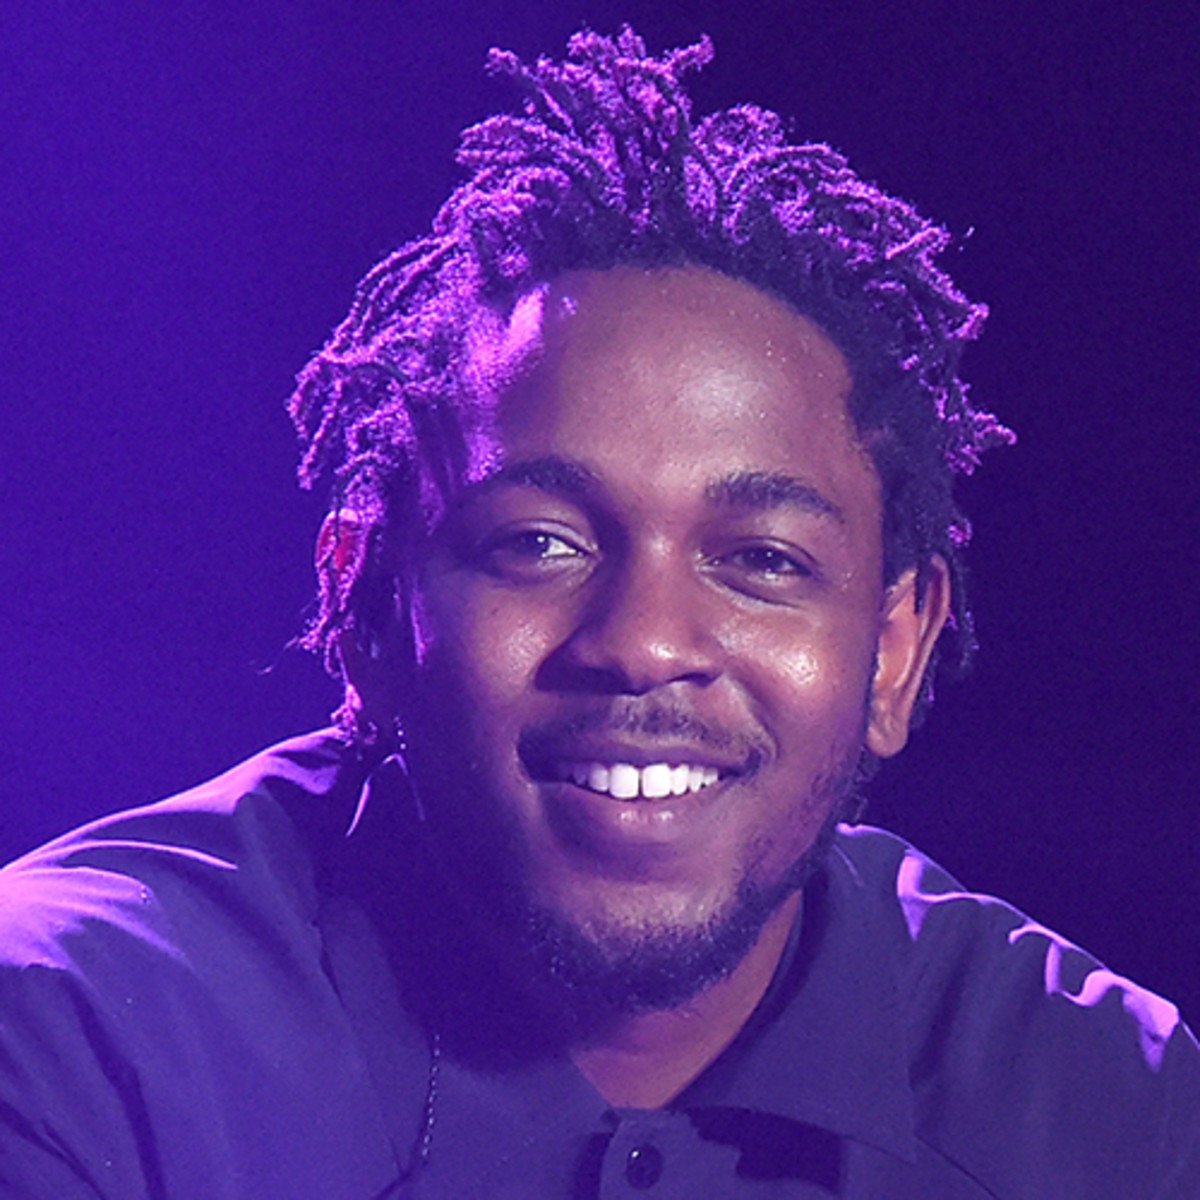 Everyone say it with me  Happy birthday Kendrick Lamar 